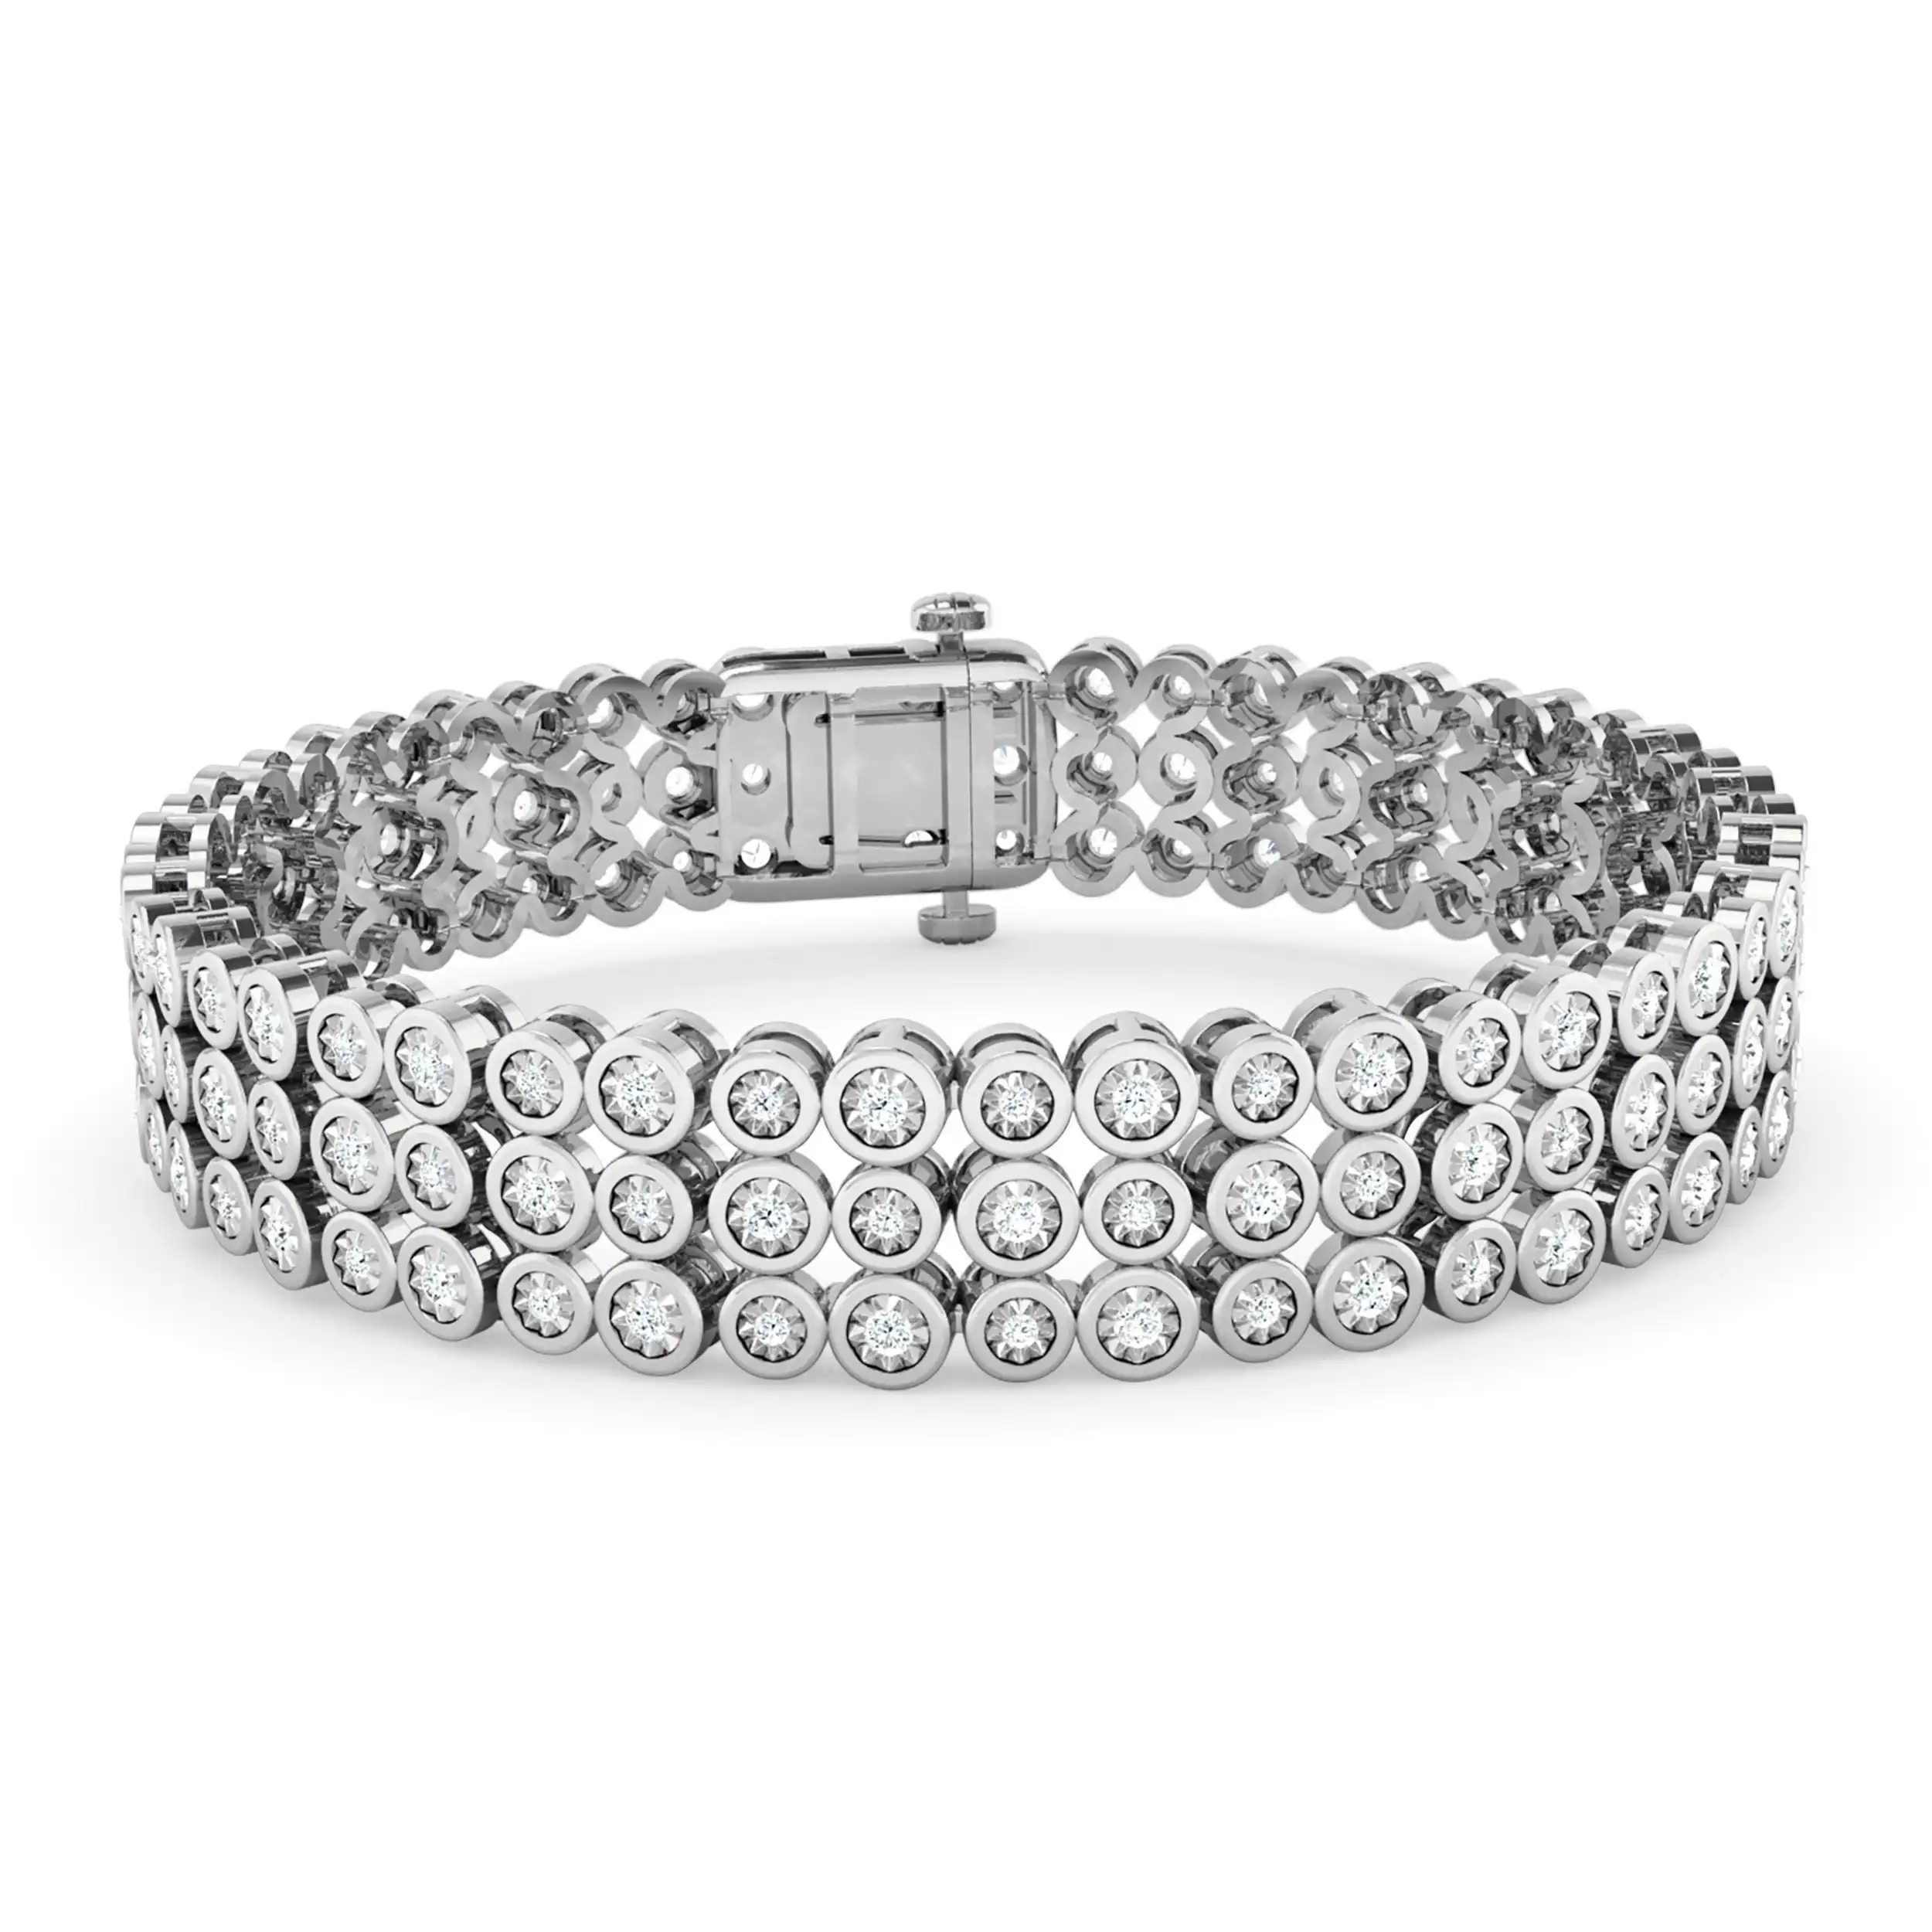 Bezel Tennis Bracelet with 1.50ct of Diamonds in Sterling Silver